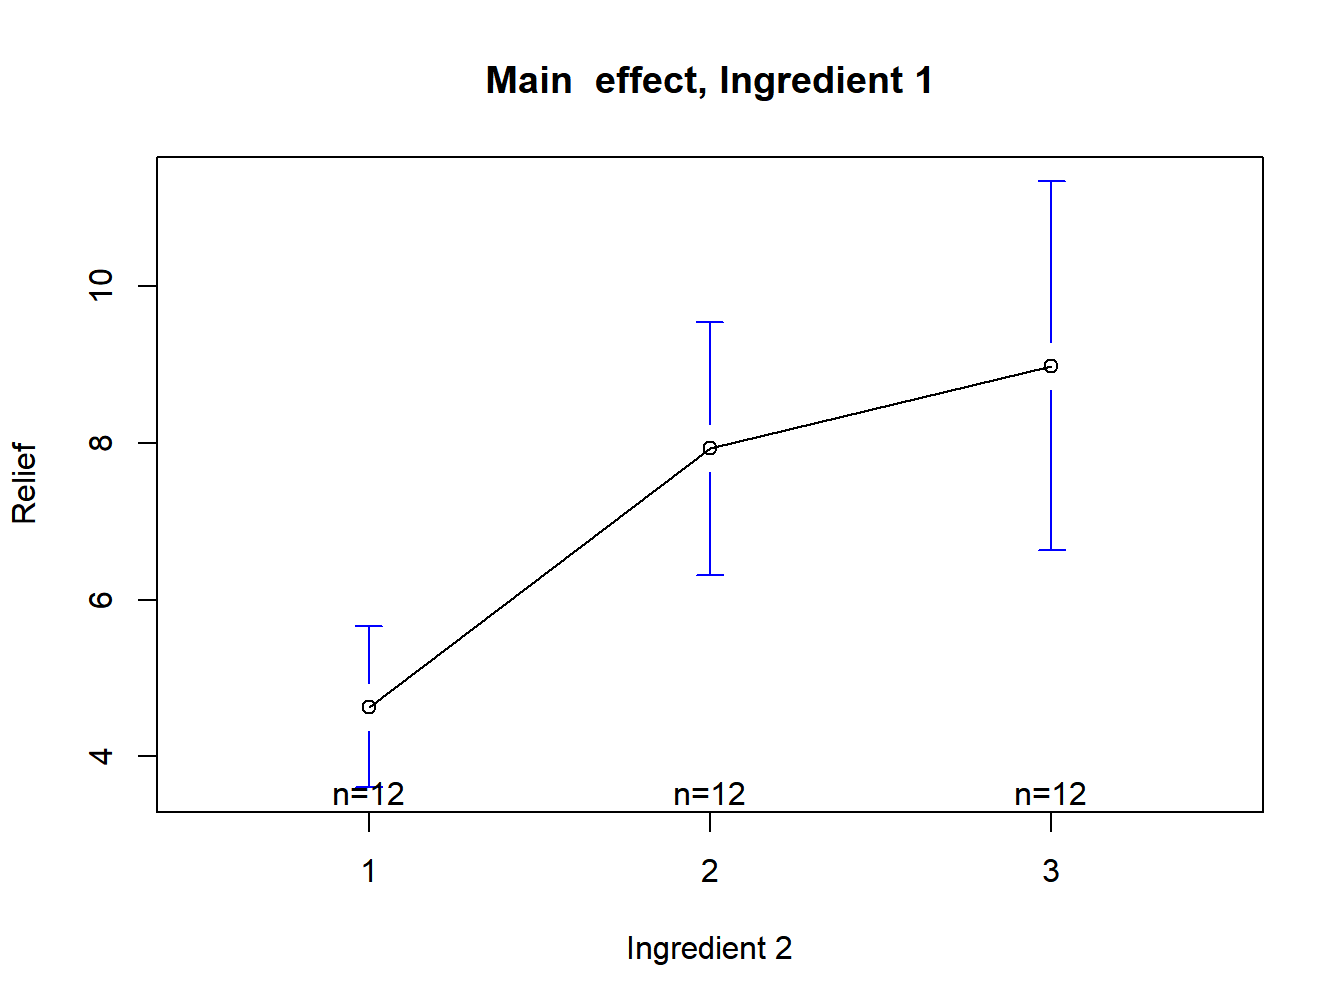 Main effect plot for ingredient 2